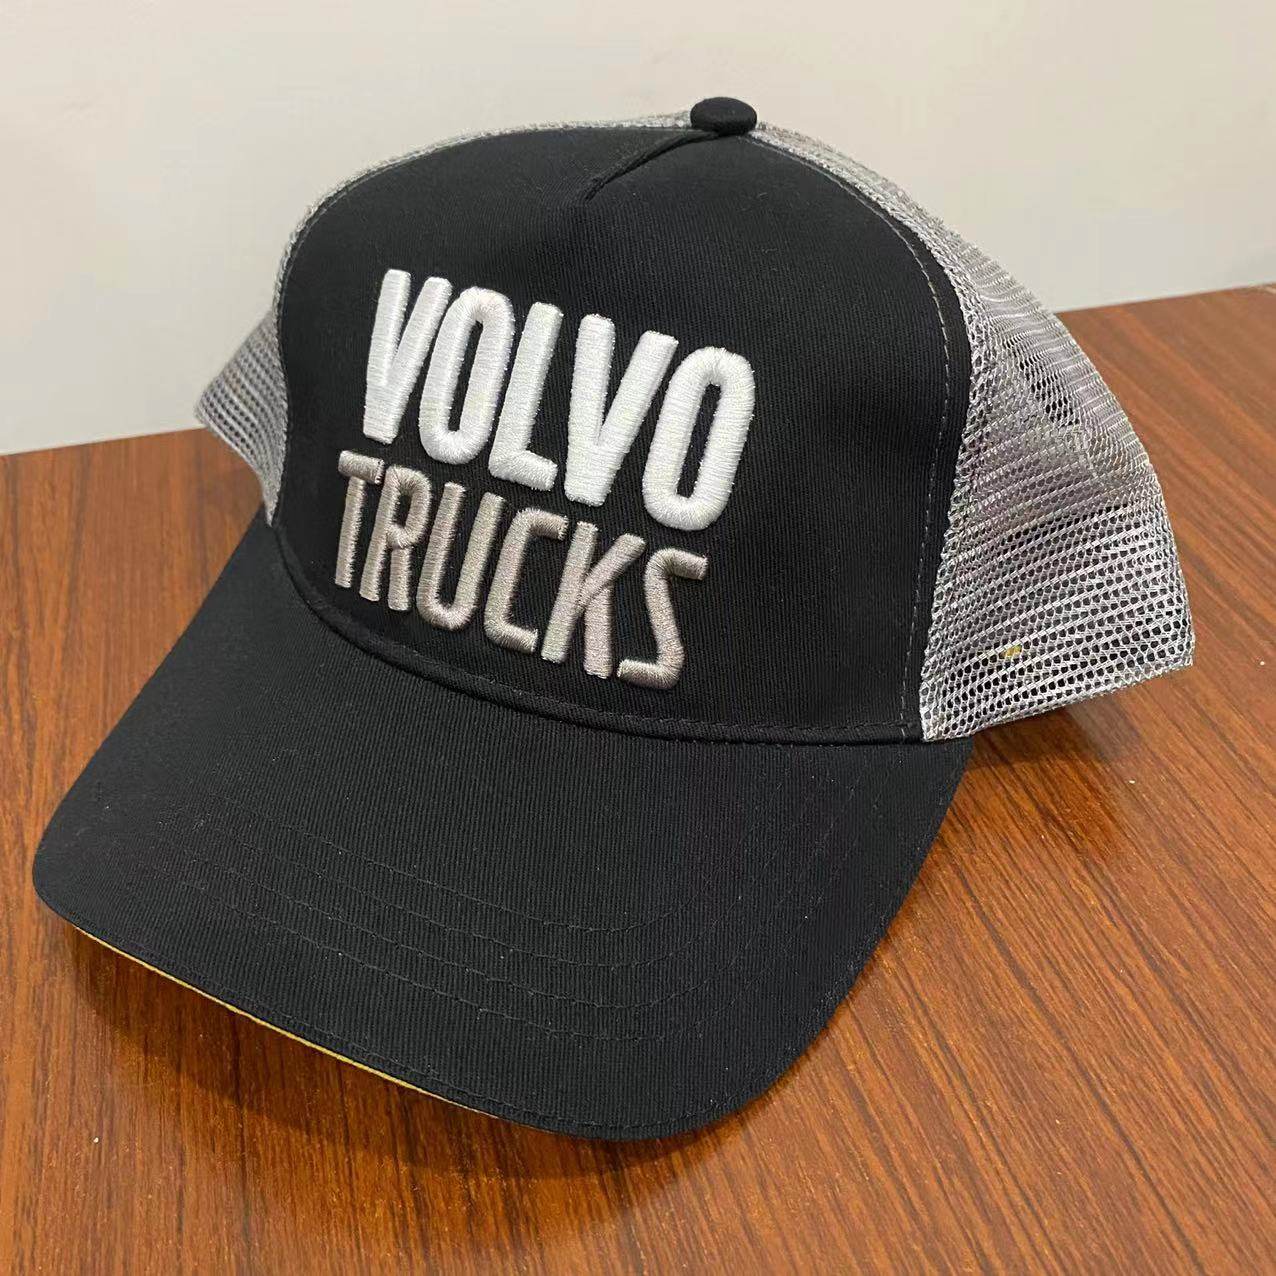 VOLVO Trucks Mesh Back